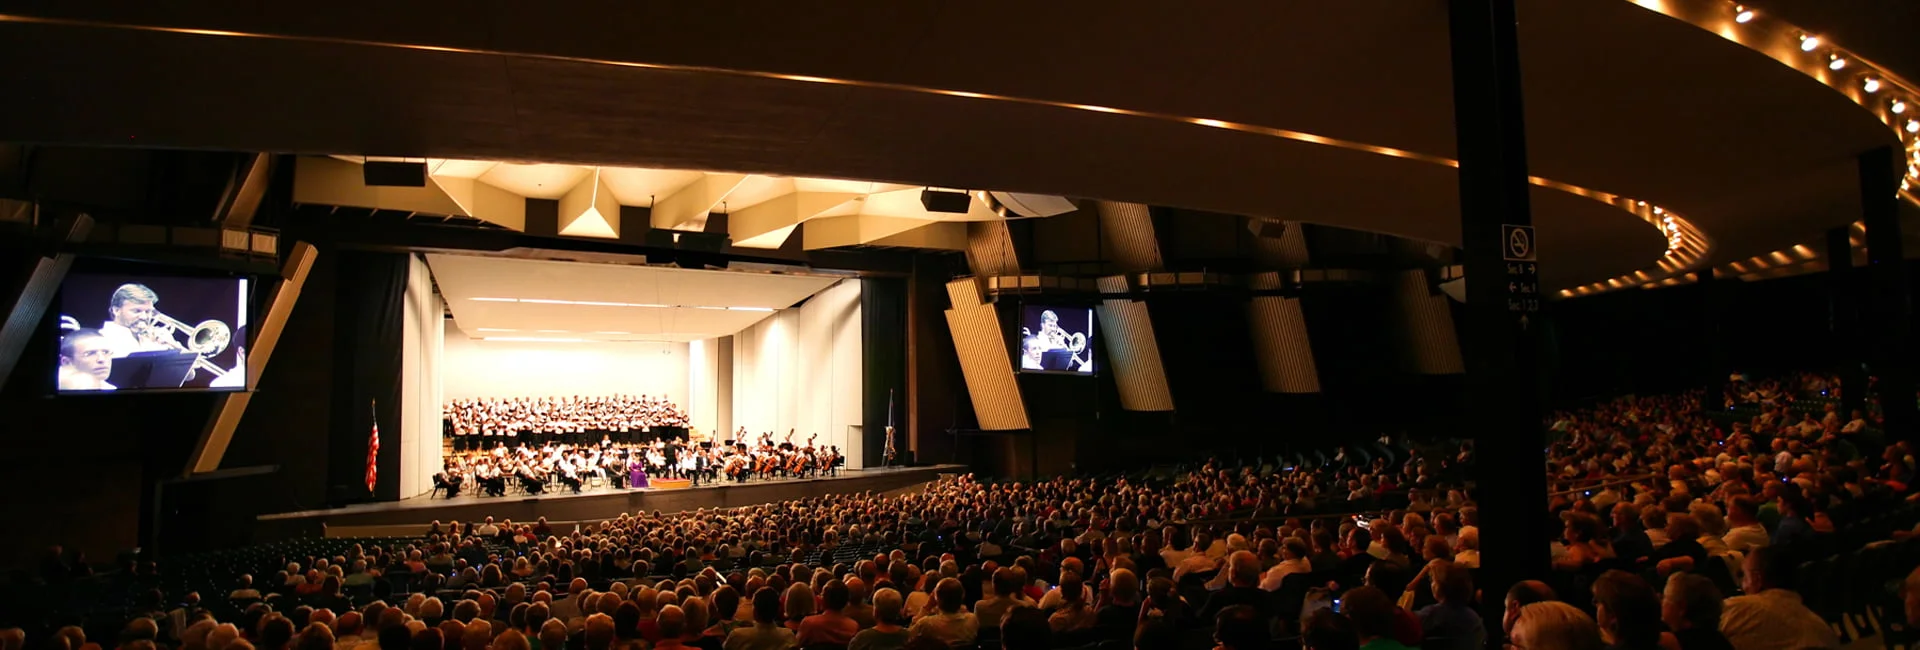 Photo Courtesy of Saratoga Performing Arts Center, Philadelphia Orchestra performance | Capital-Saratoga Region